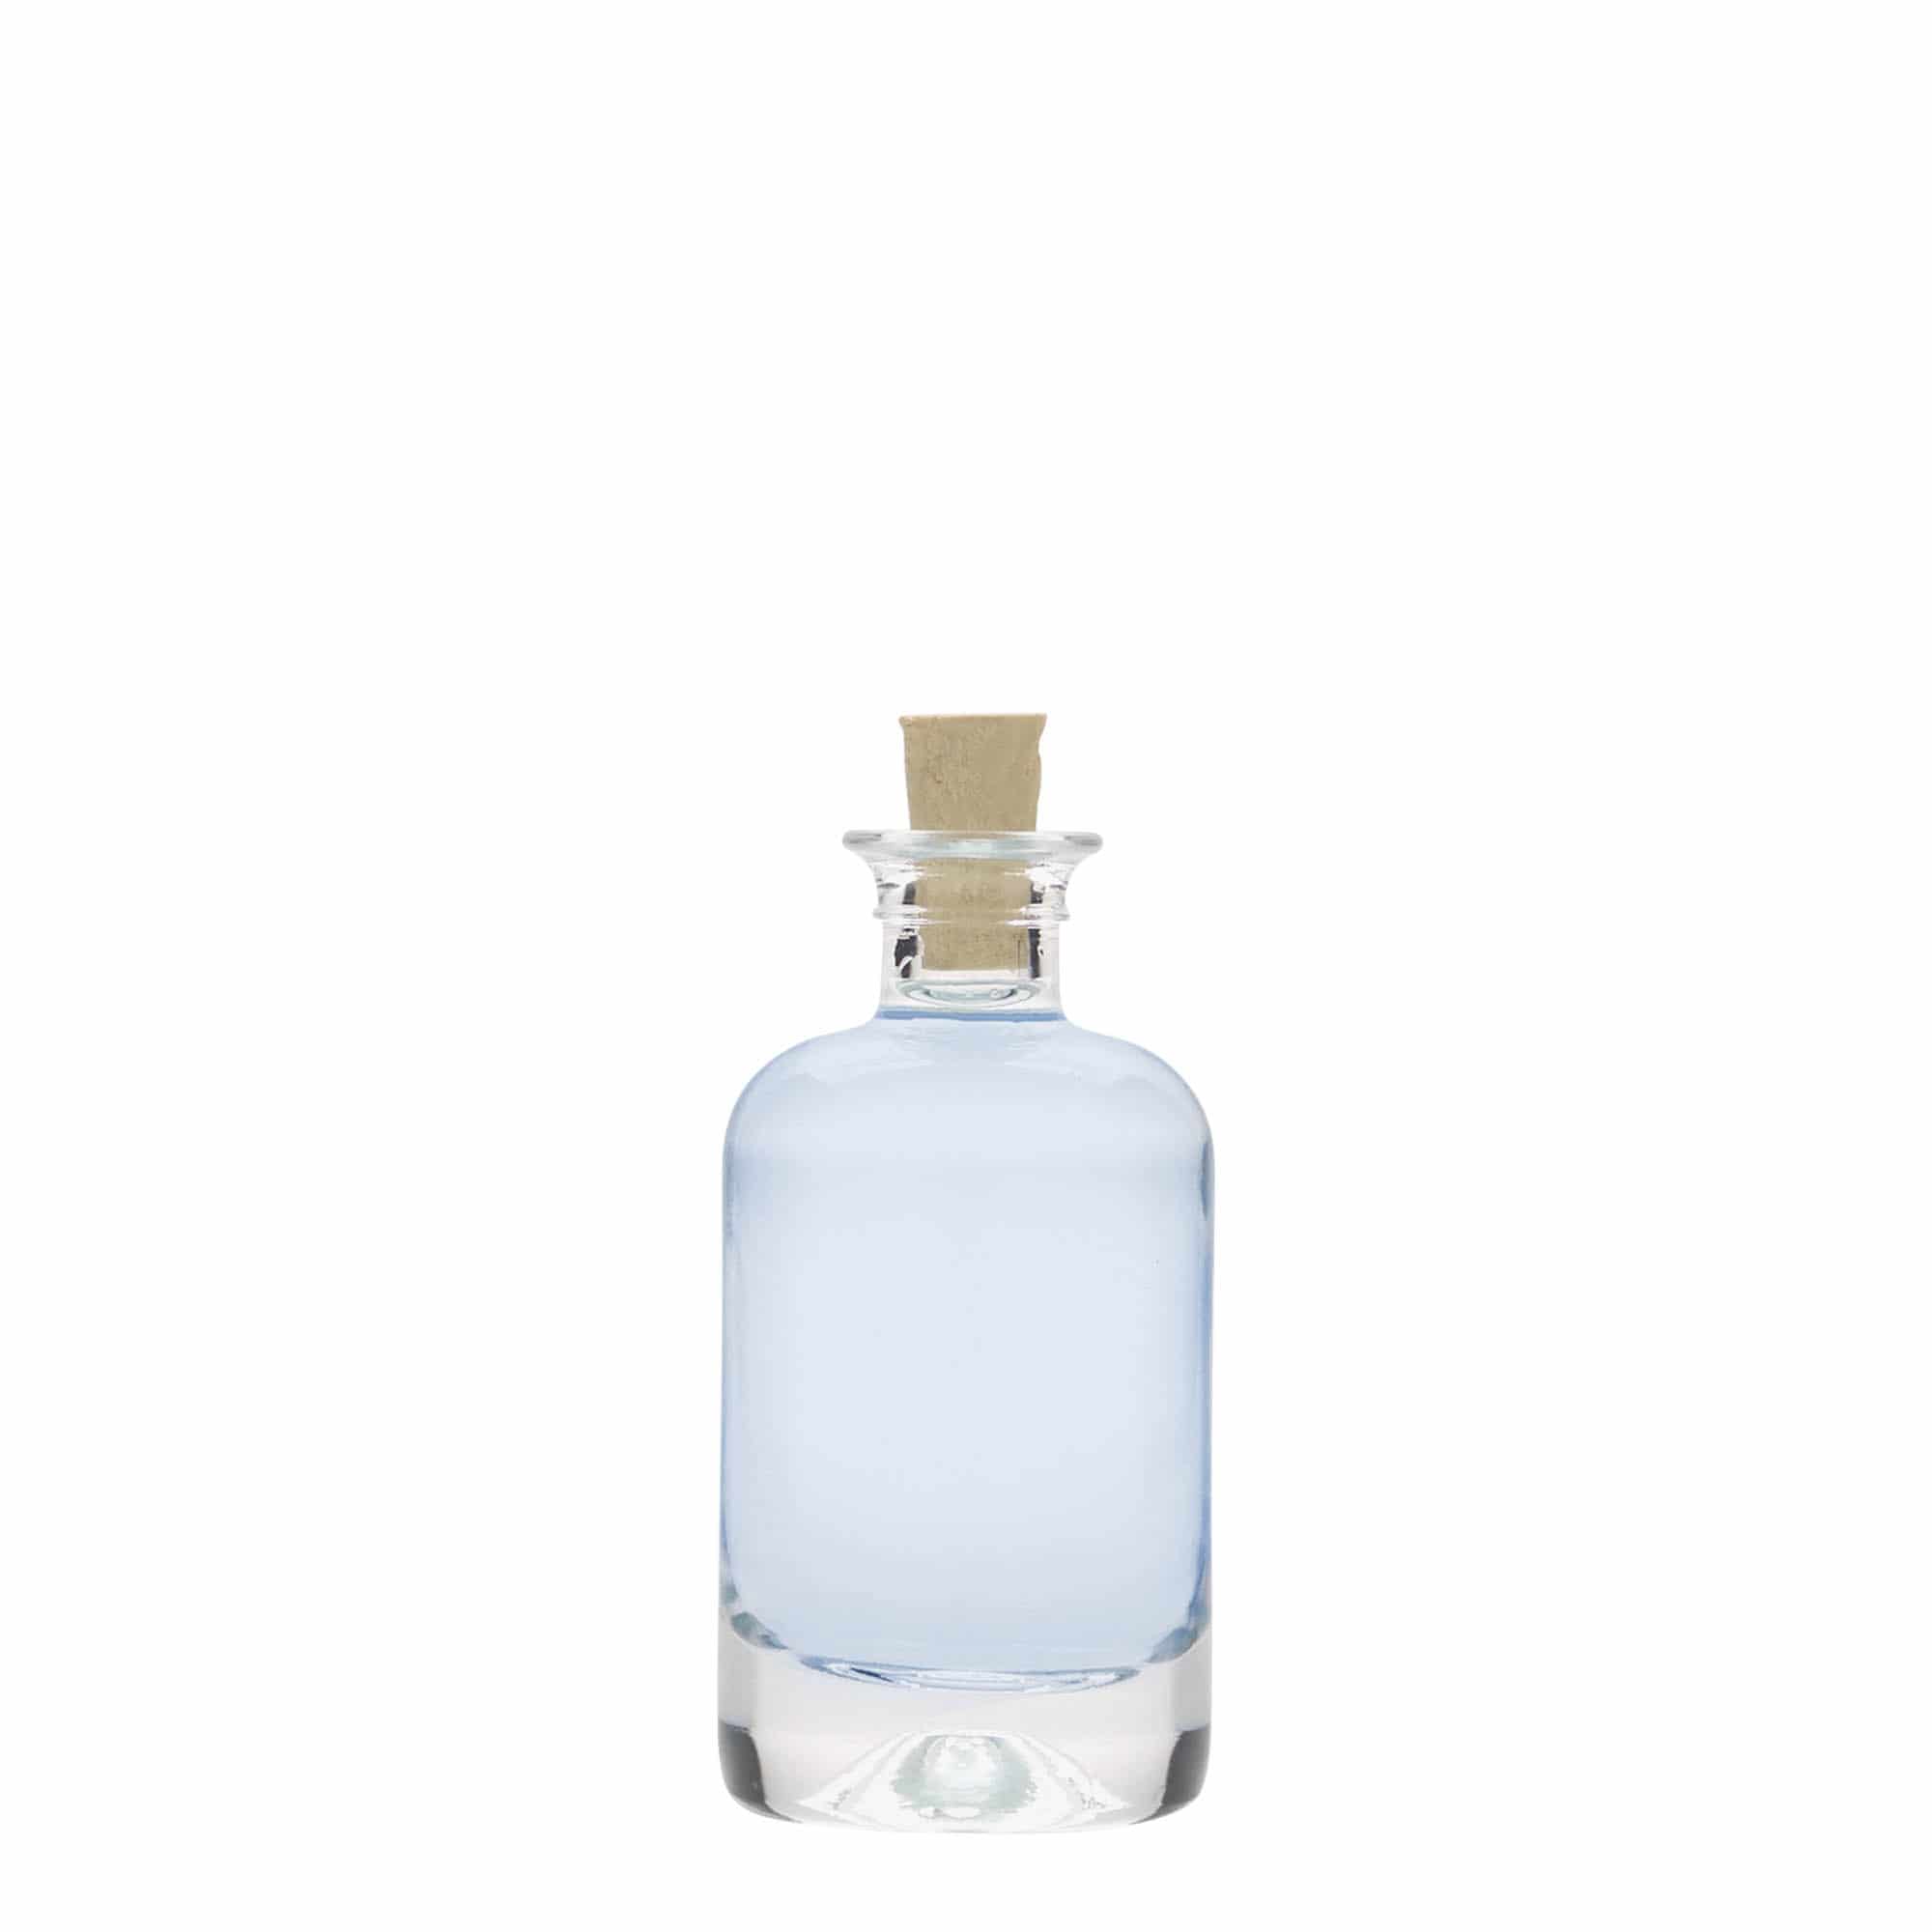 40 ml glass apothecary bottle, closure: cork